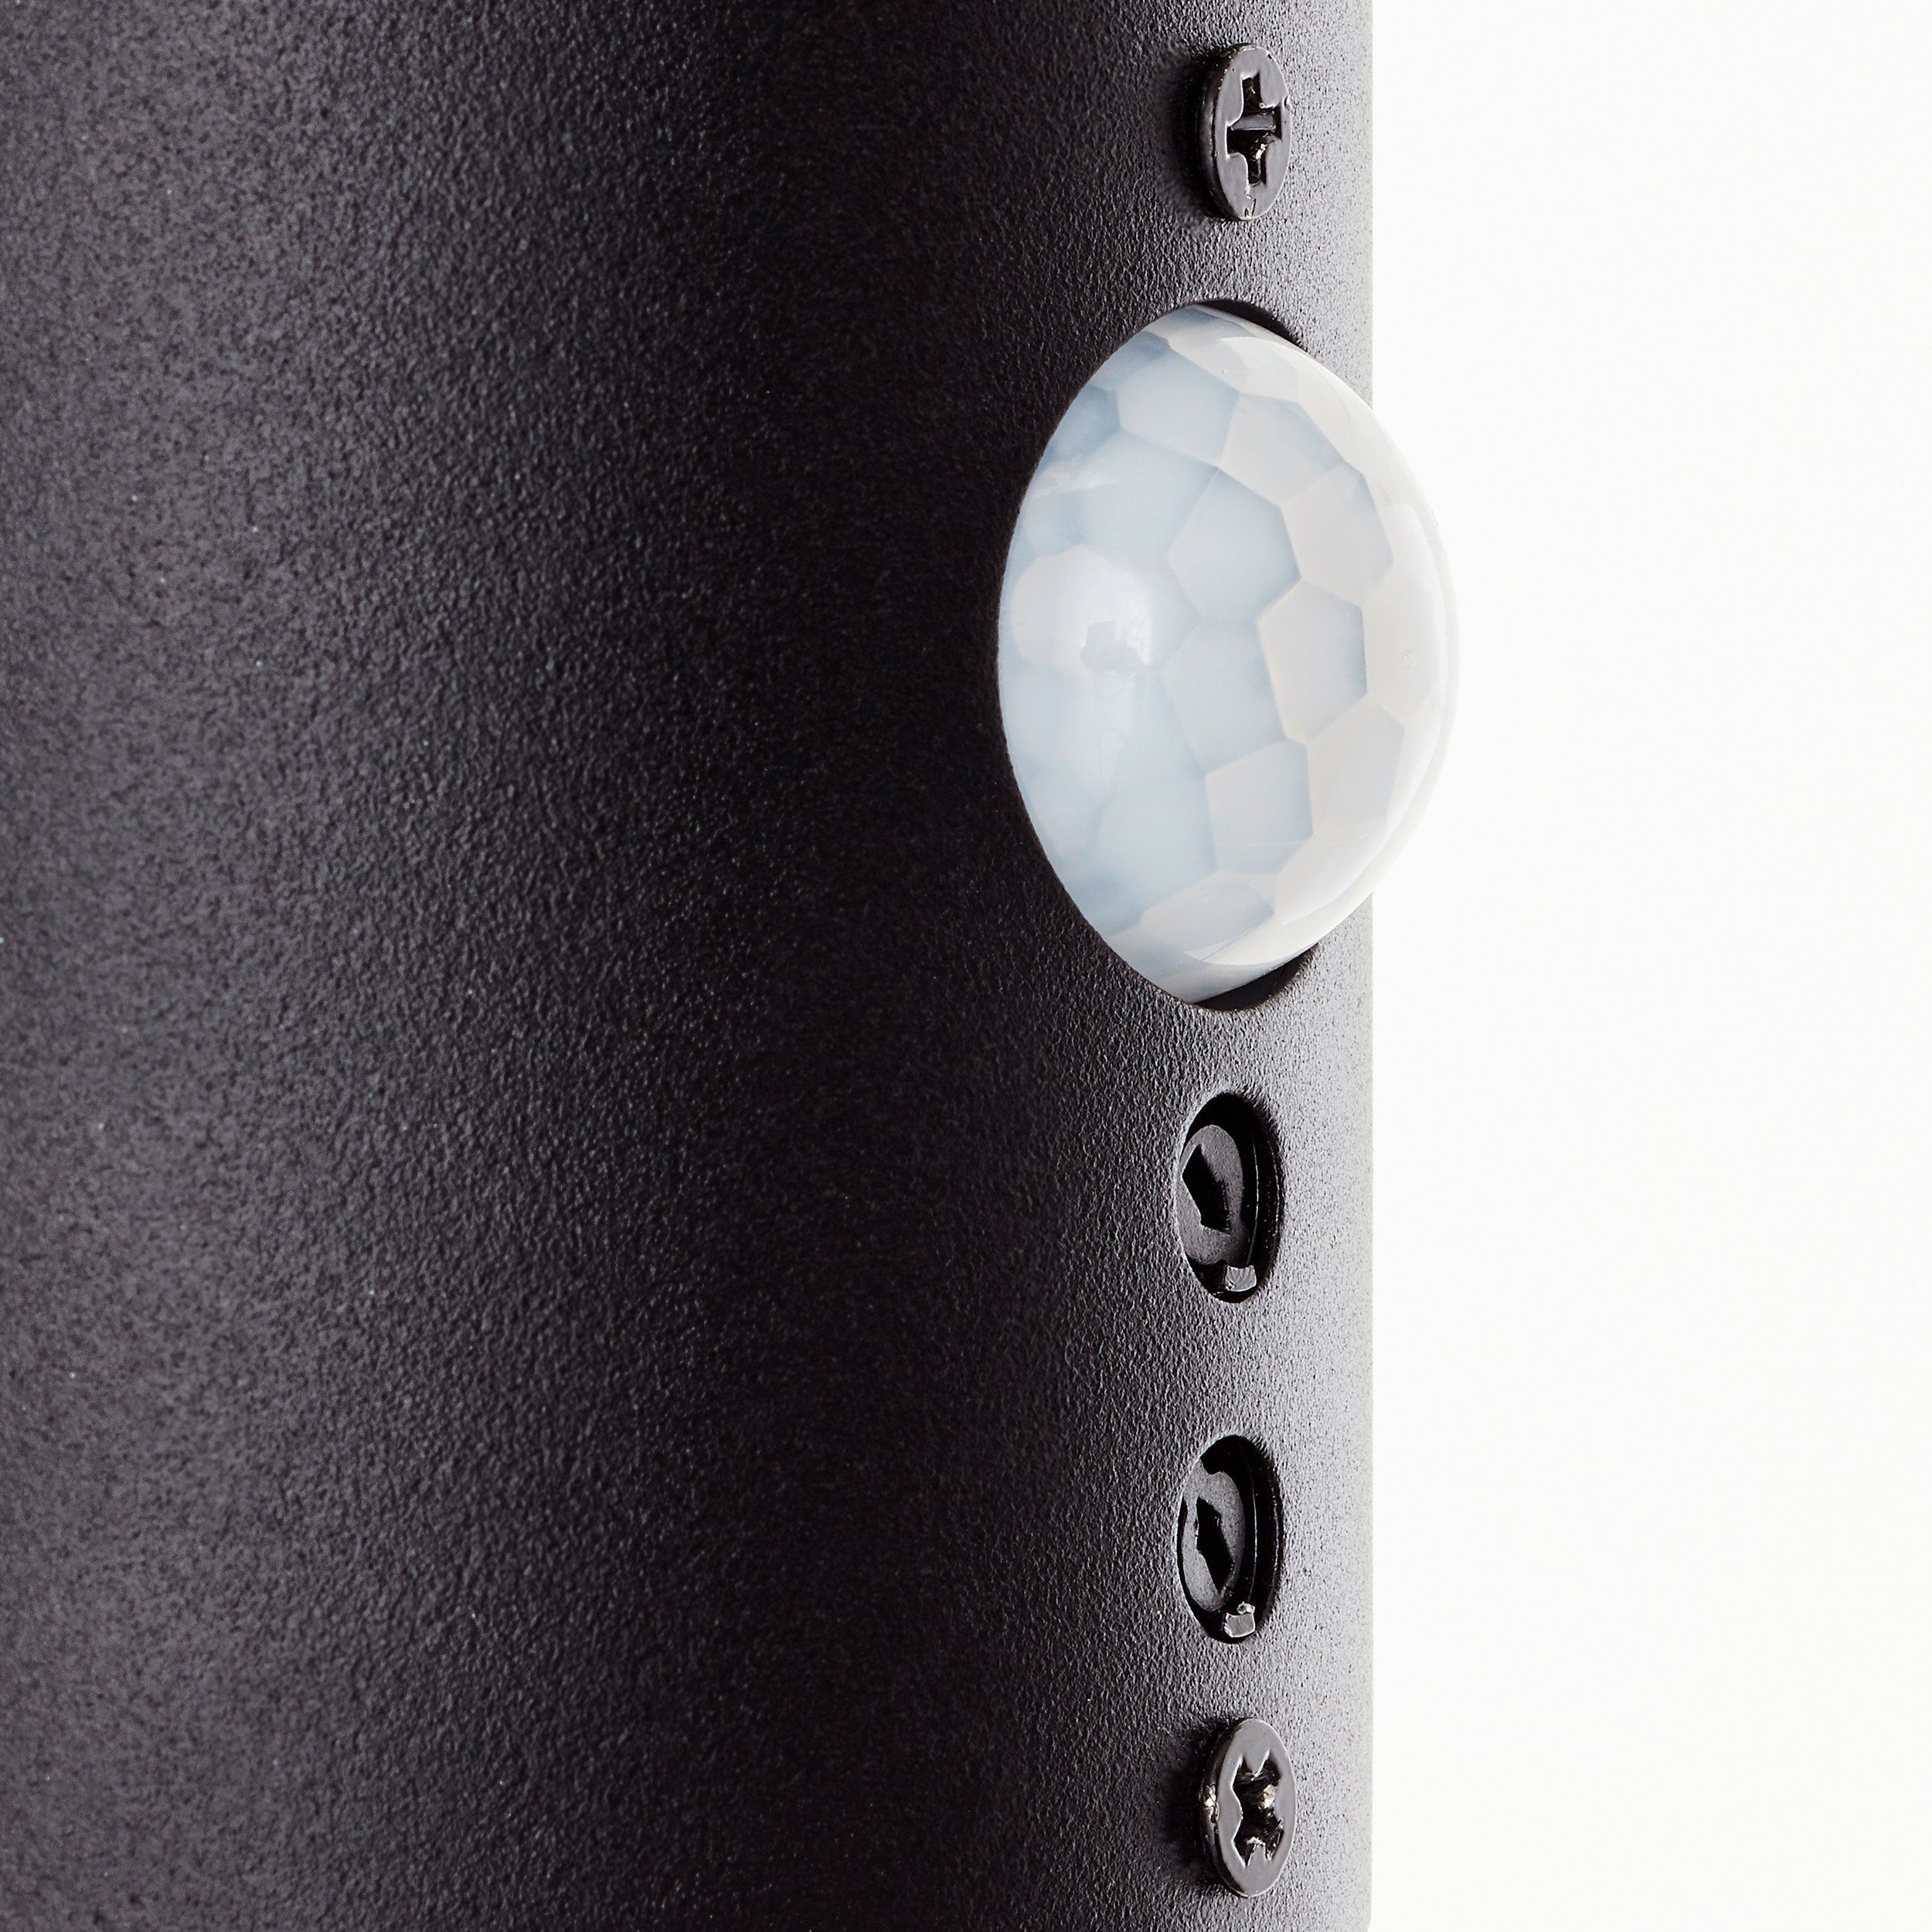 Brilliant LED Ilton Außenwandleuchte sand schwarz, 1x LED Edelstahl/Kunststoff, Ilton, Außen-Wandleuchte LED